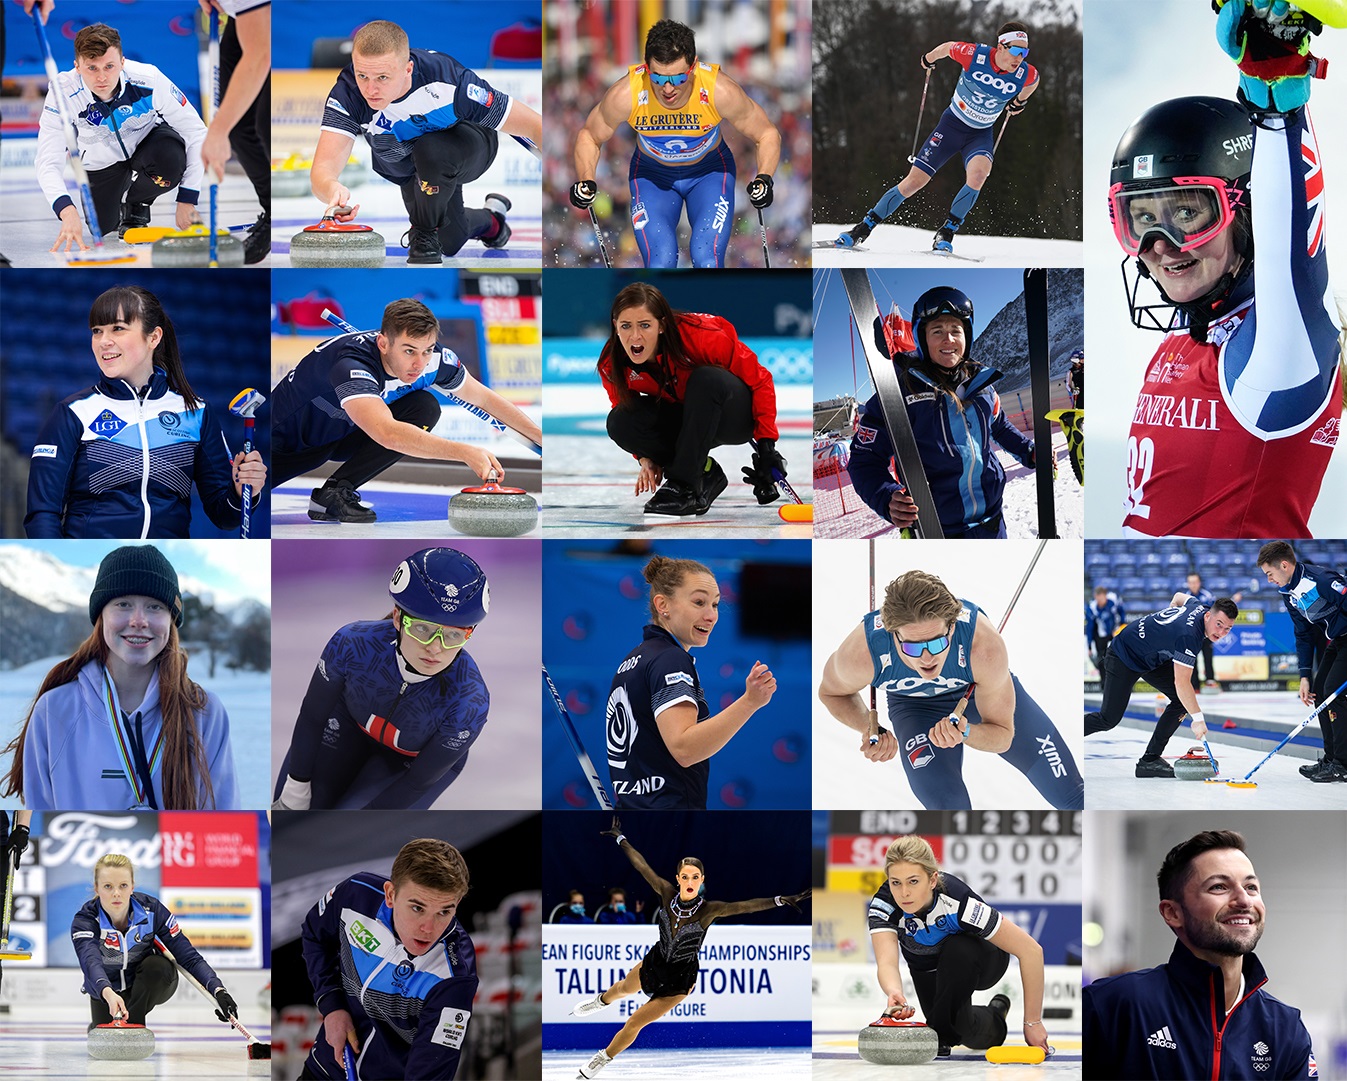 The 19 Scottish athletes representing Team GB in Beijing